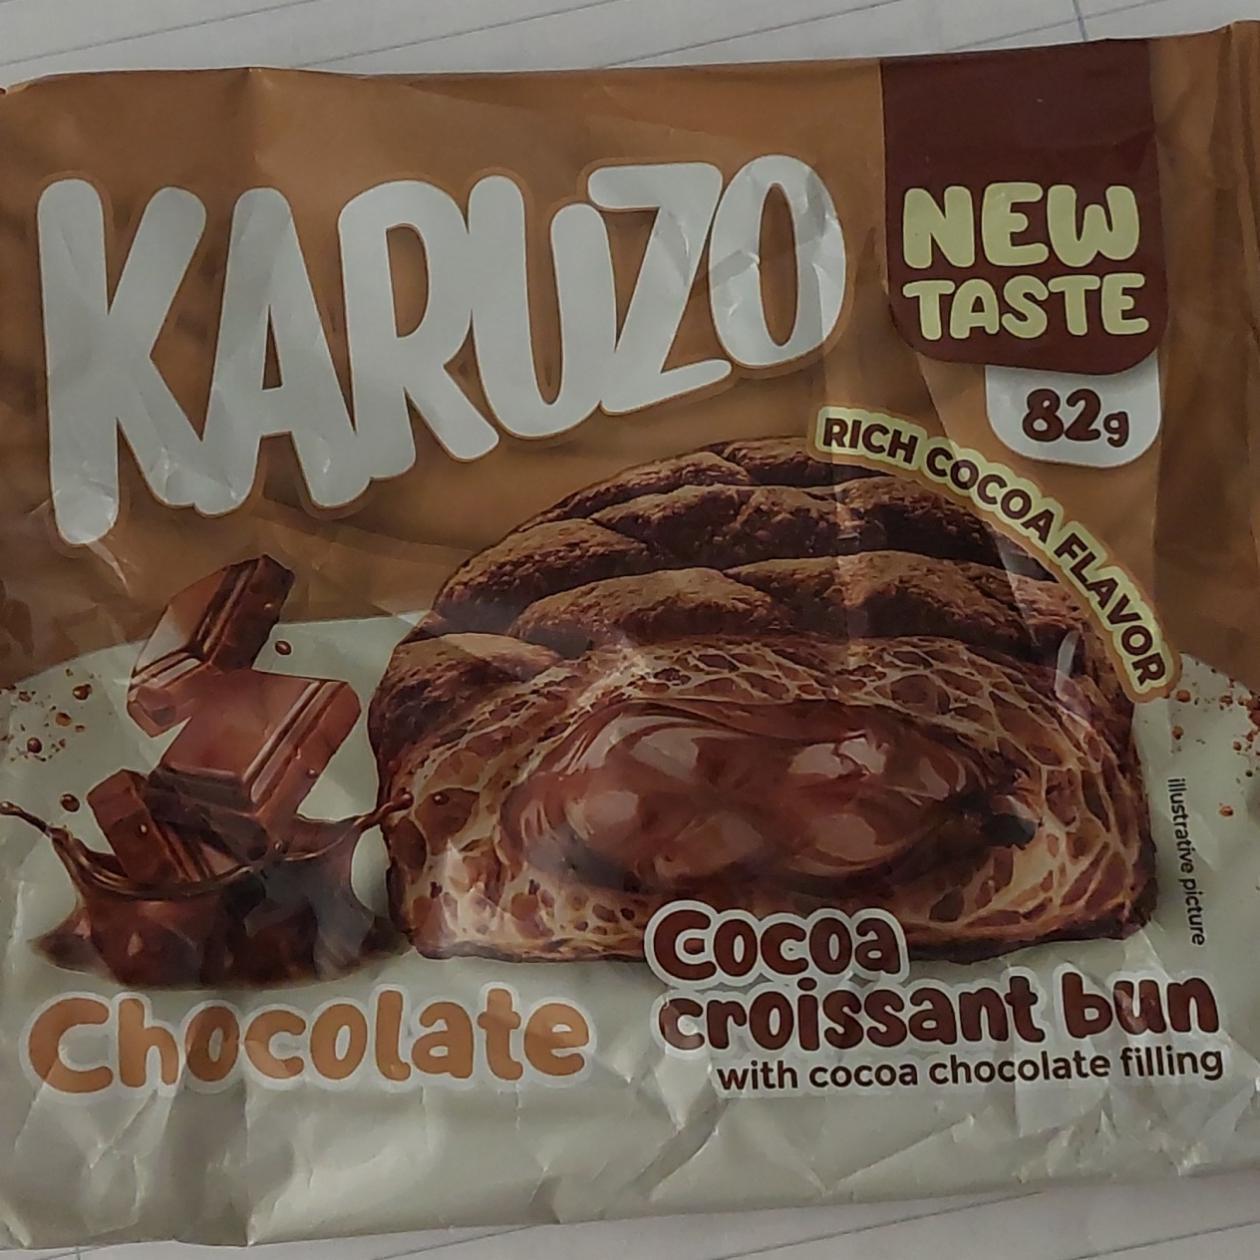 Zdjęcia - Chocolate cocoa croissant bun with cocoa chocolate filling Karuzo